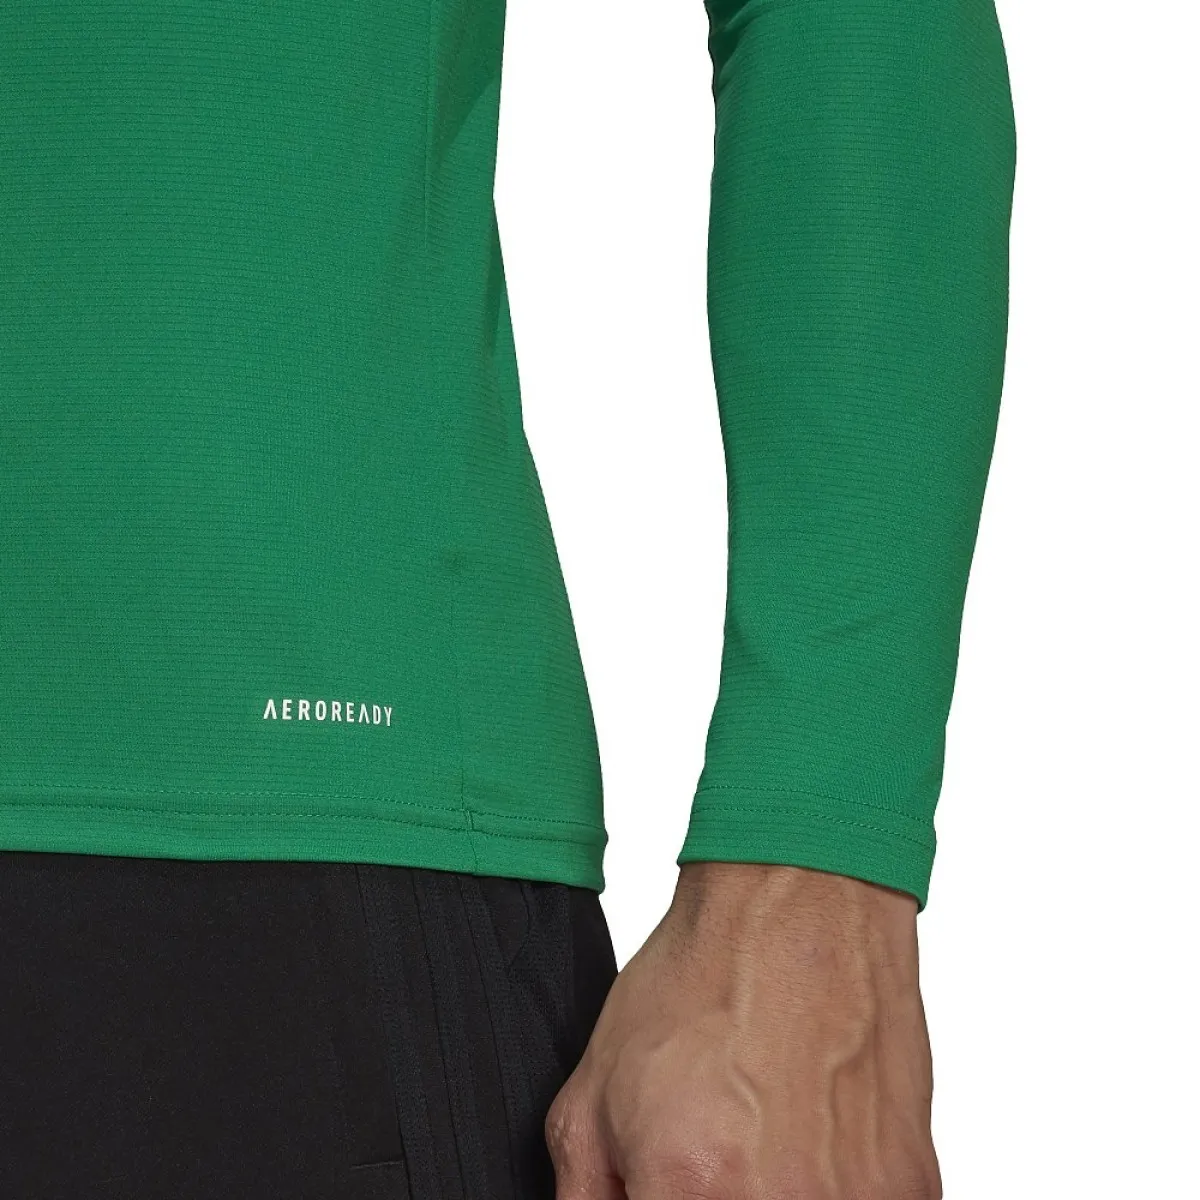 adidas Techfit T-shirt long sleeve Team Base green